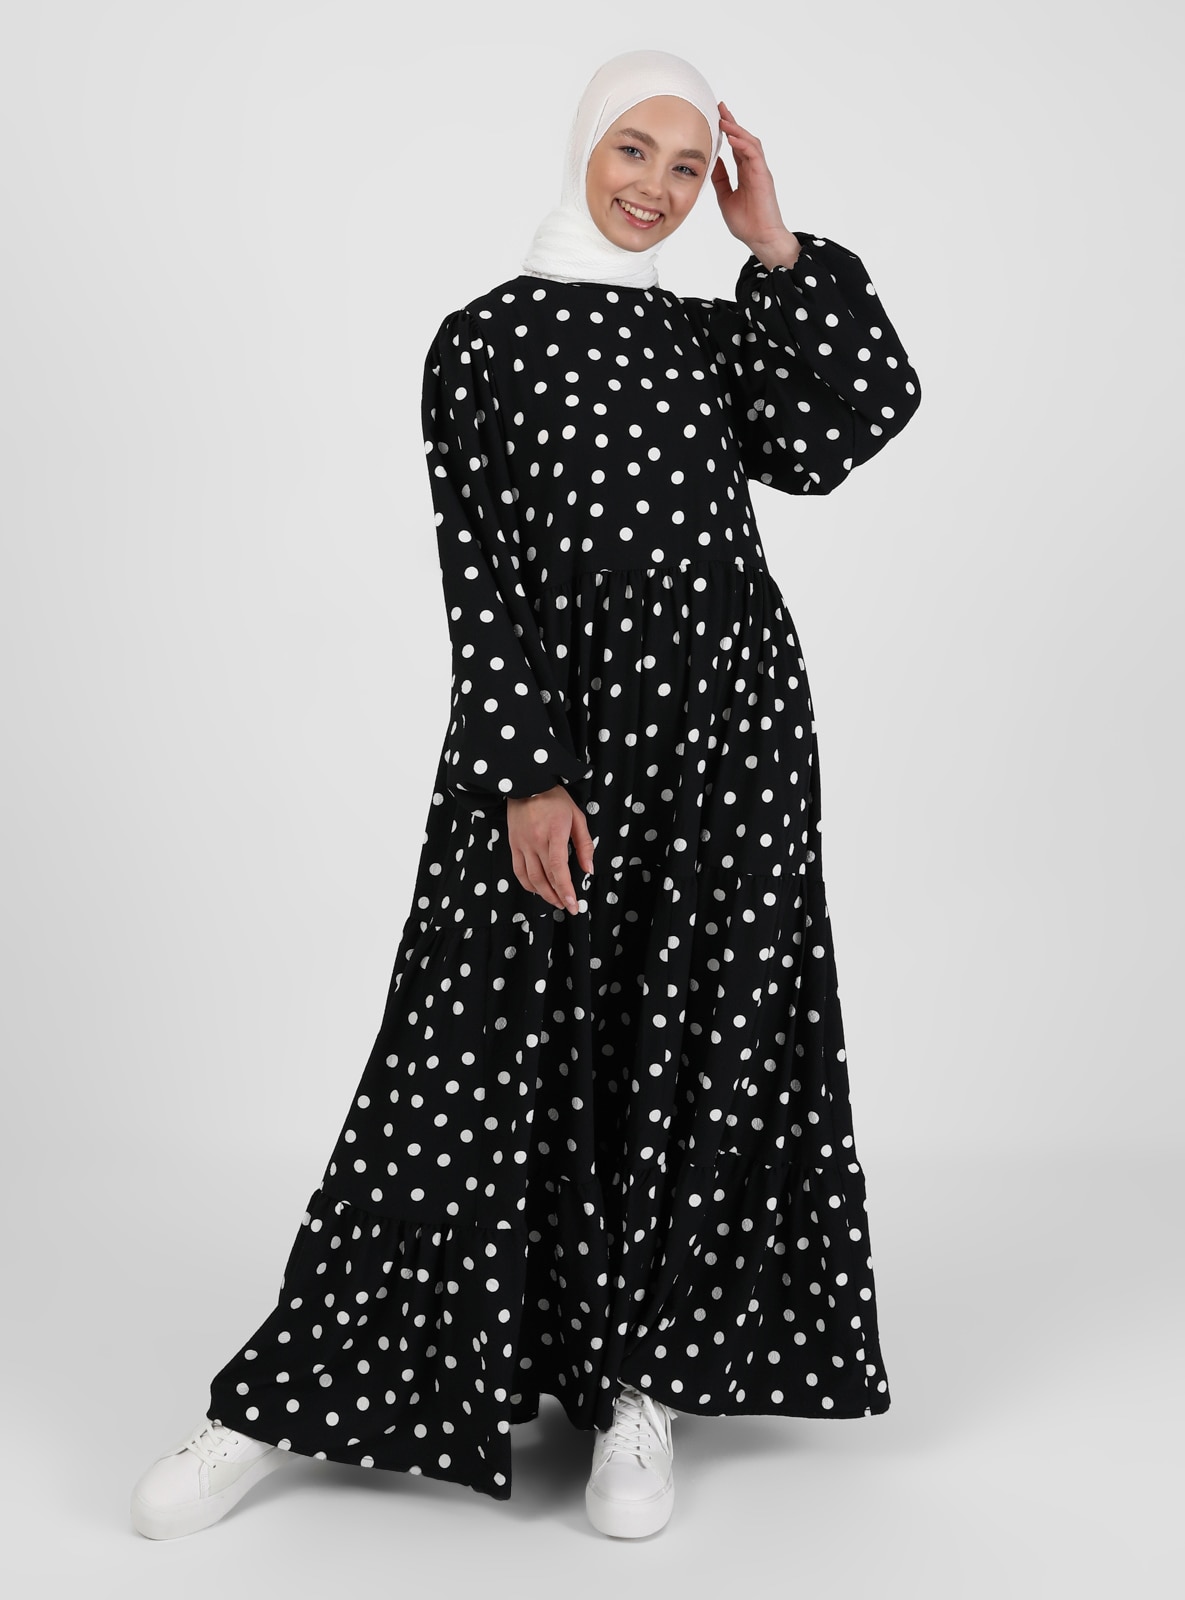 Black Polka Dot Crew neck Unlined Modest Dress